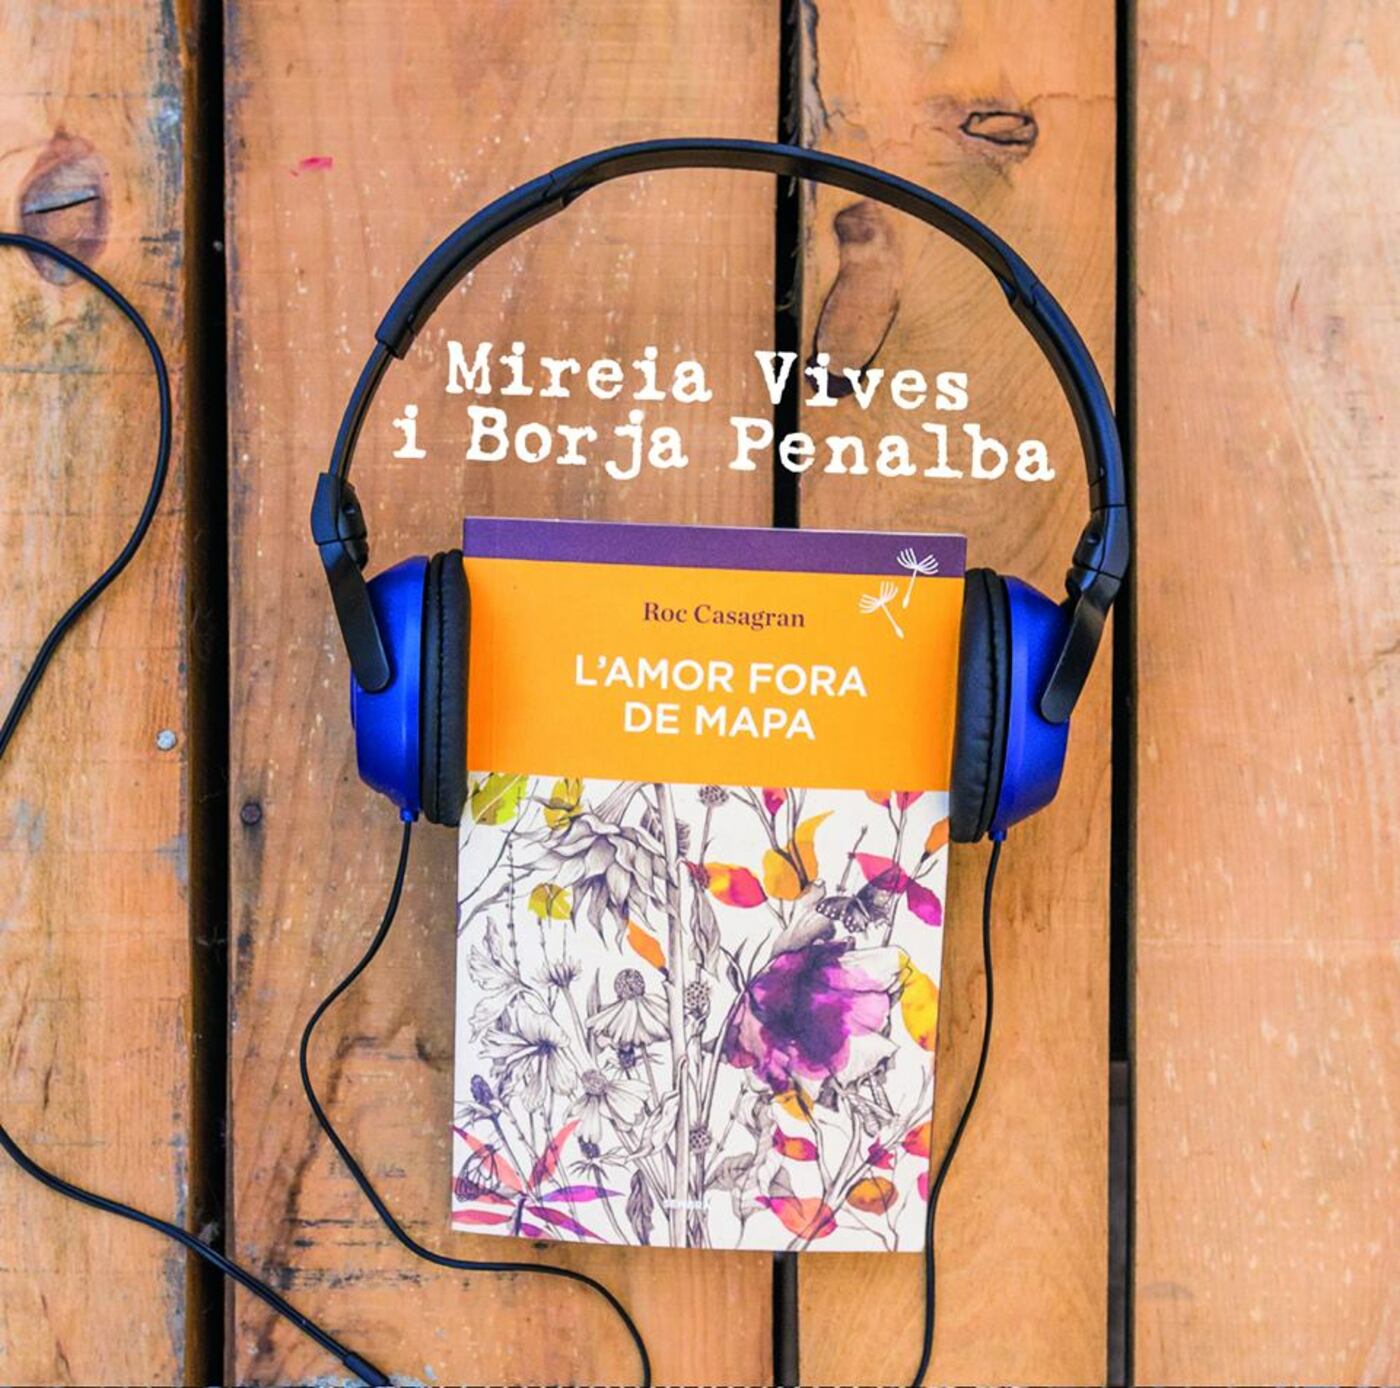 Mireia Vives i Borja Penalba - L'amor fora de mapa | musica en valencià